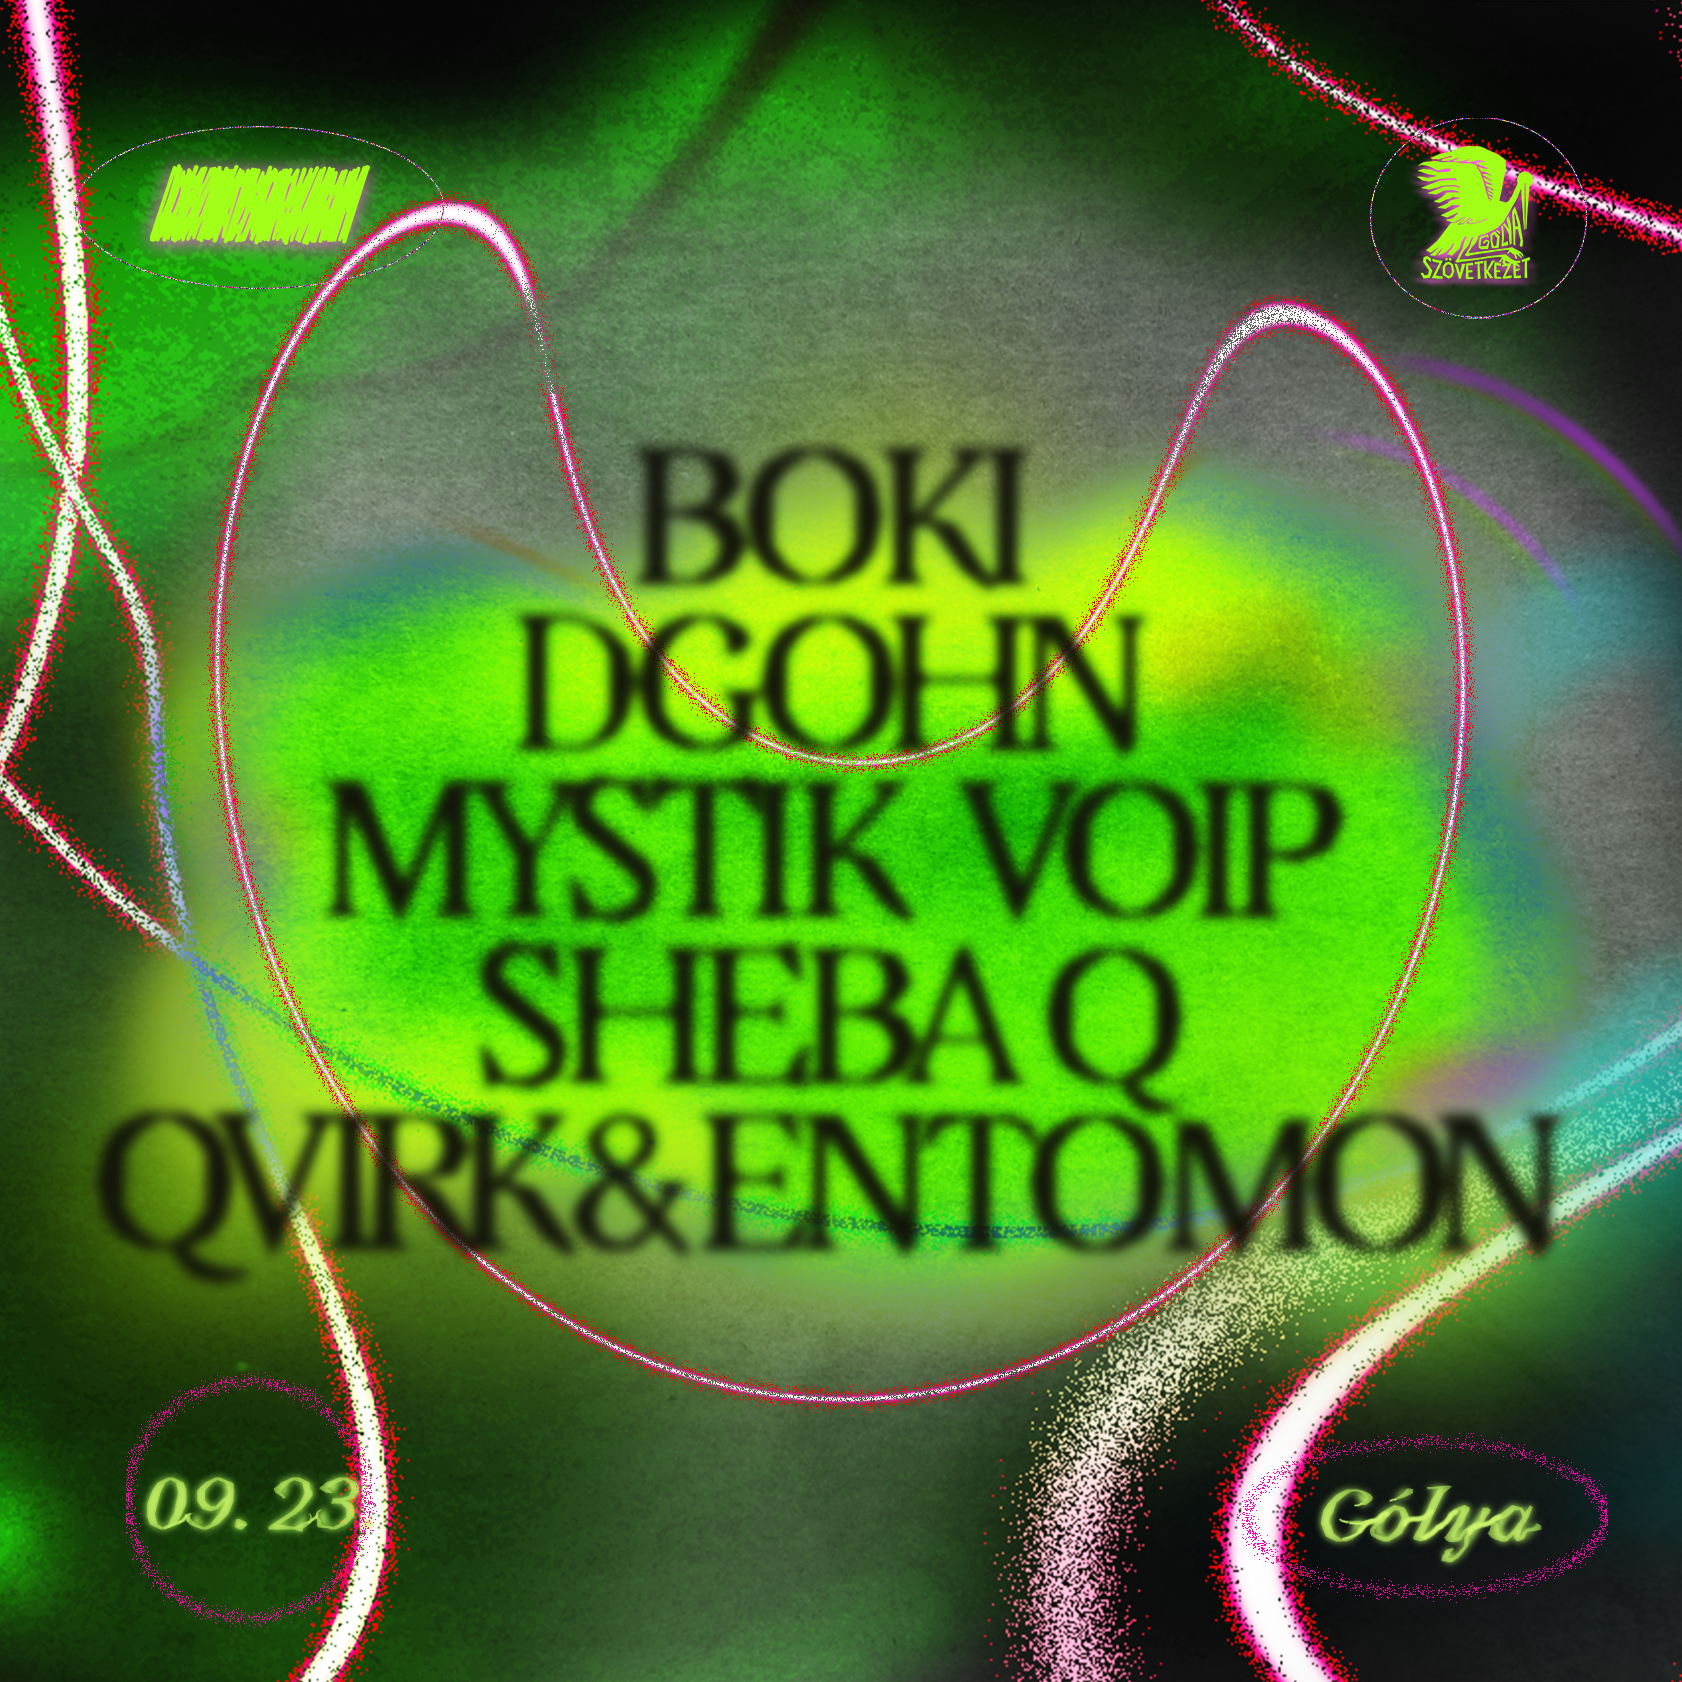 Gólya x MMN 3.0: dgoHn/ShebaQ/Boki/MystikVoip/qvirk/entomon - Página frontal